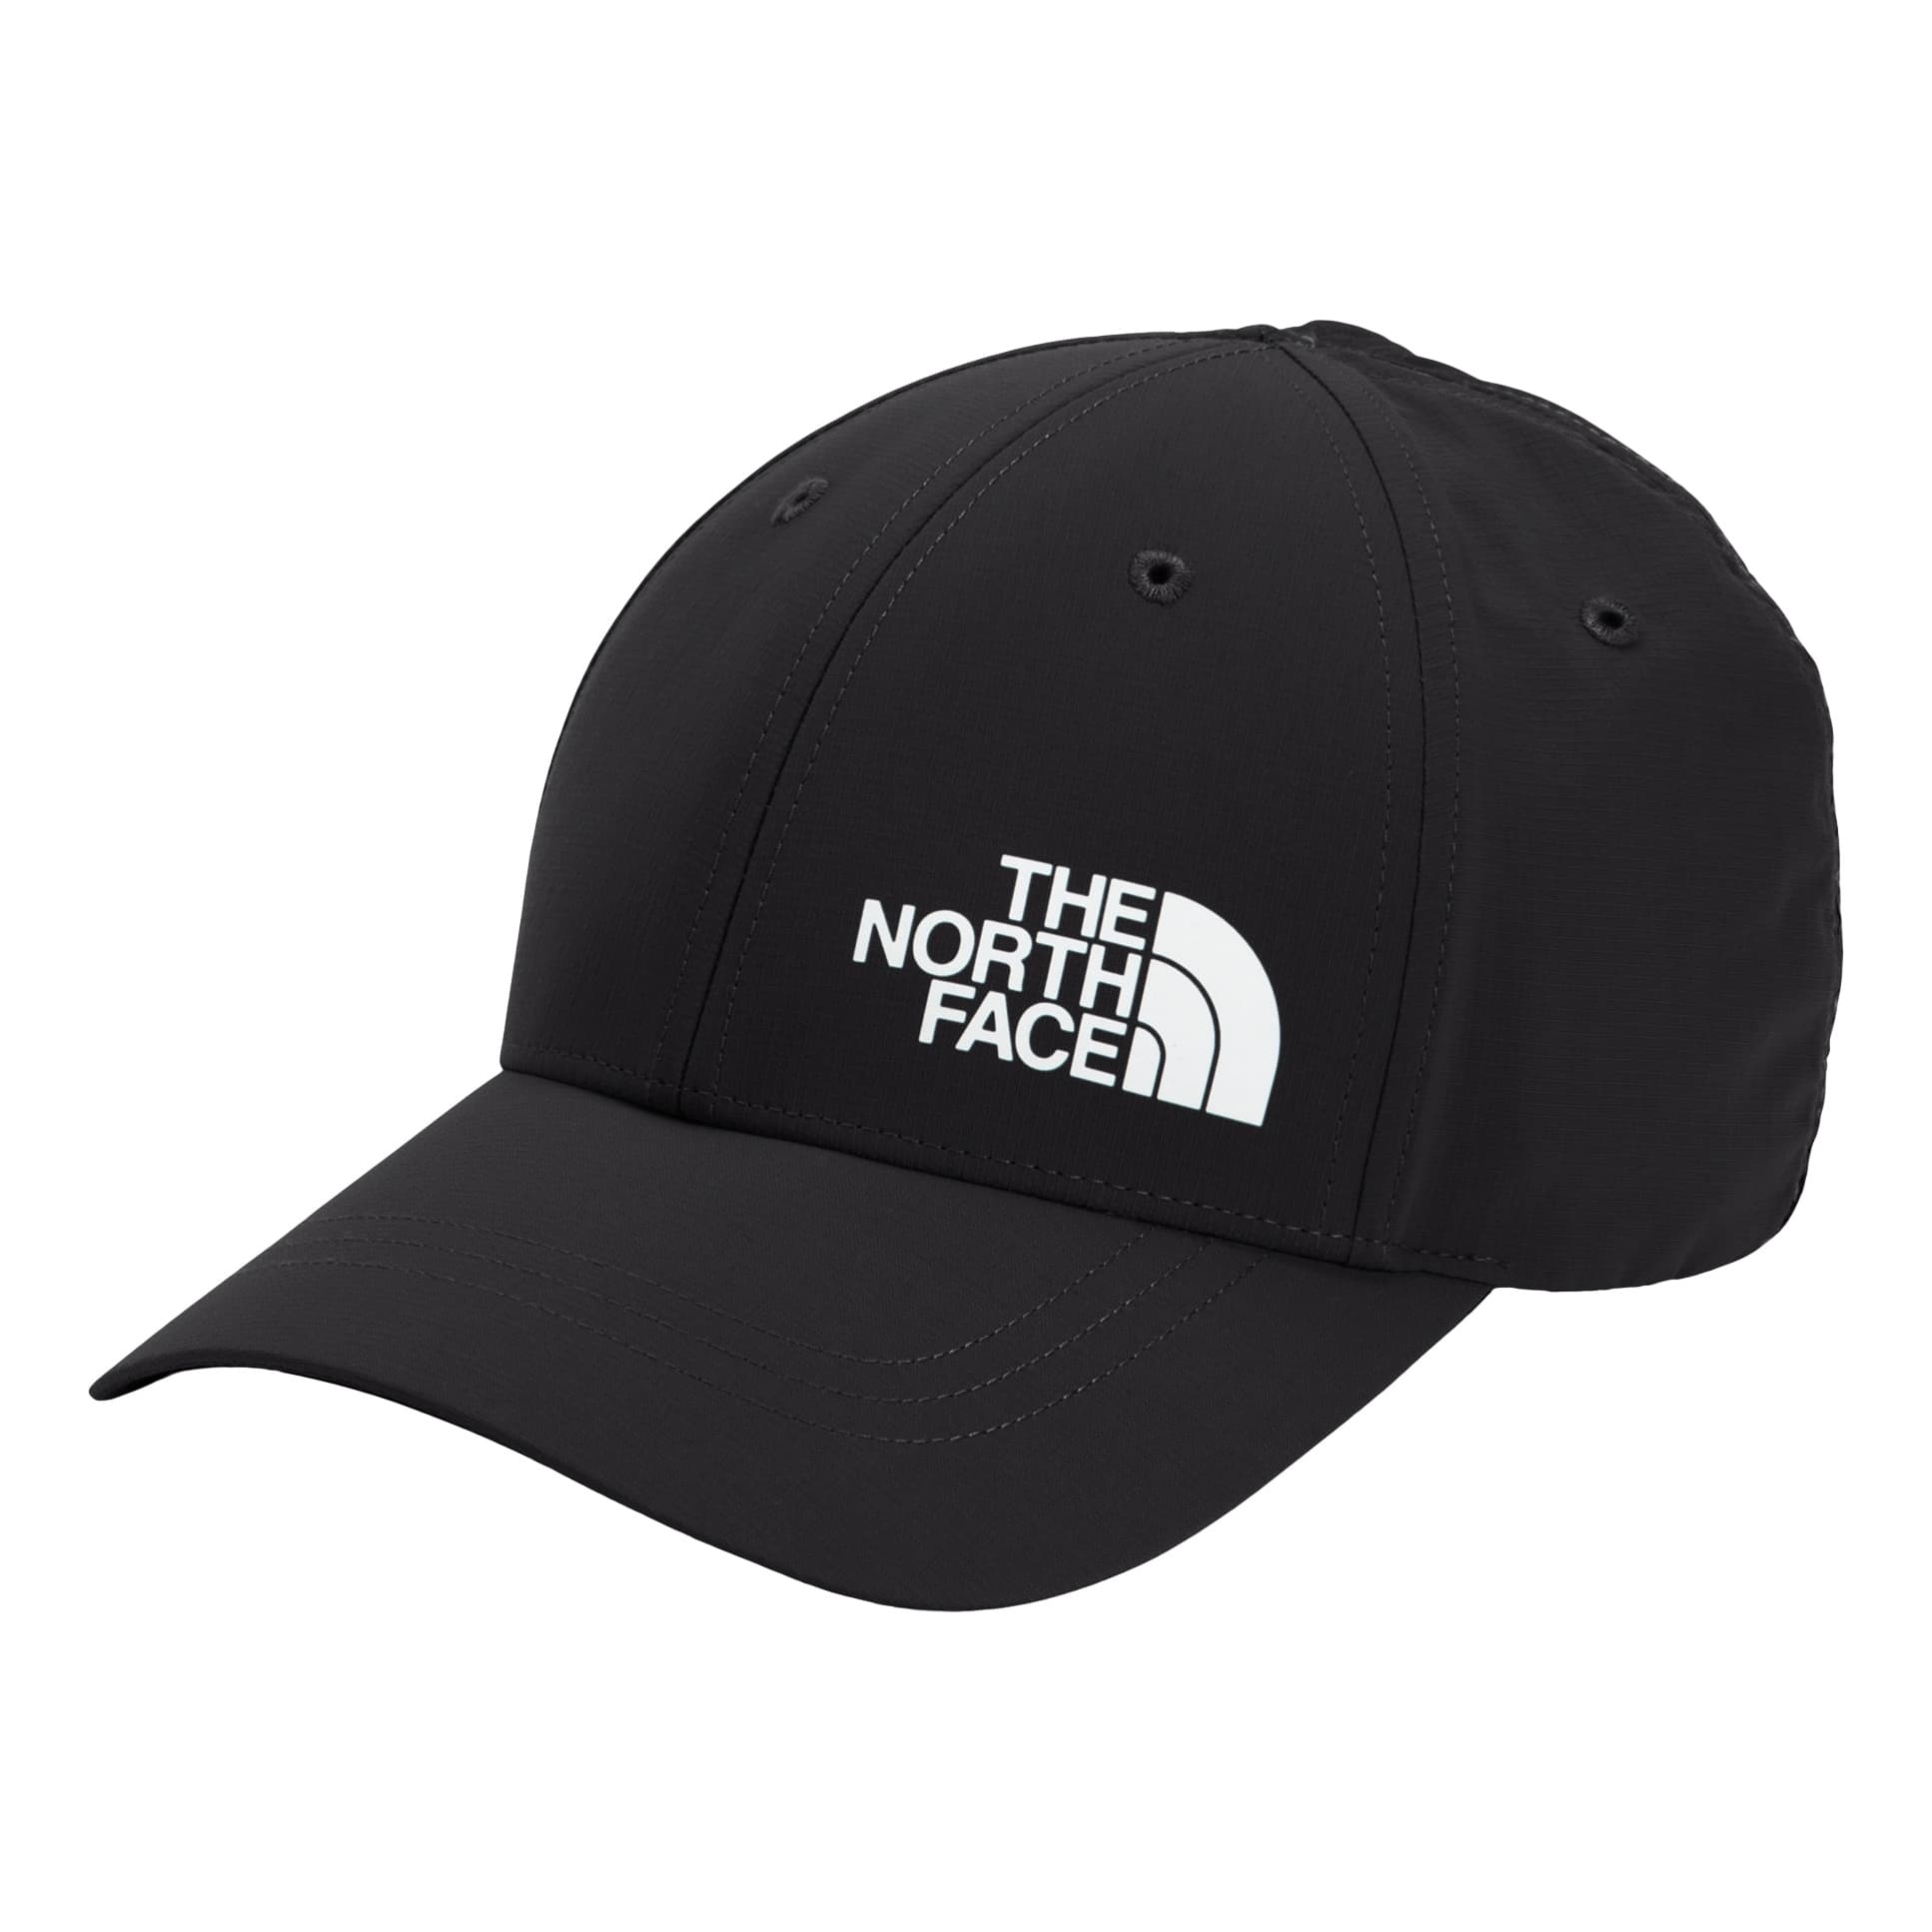 The North Face® Women’s Horizon Ball Cap - TNF Black